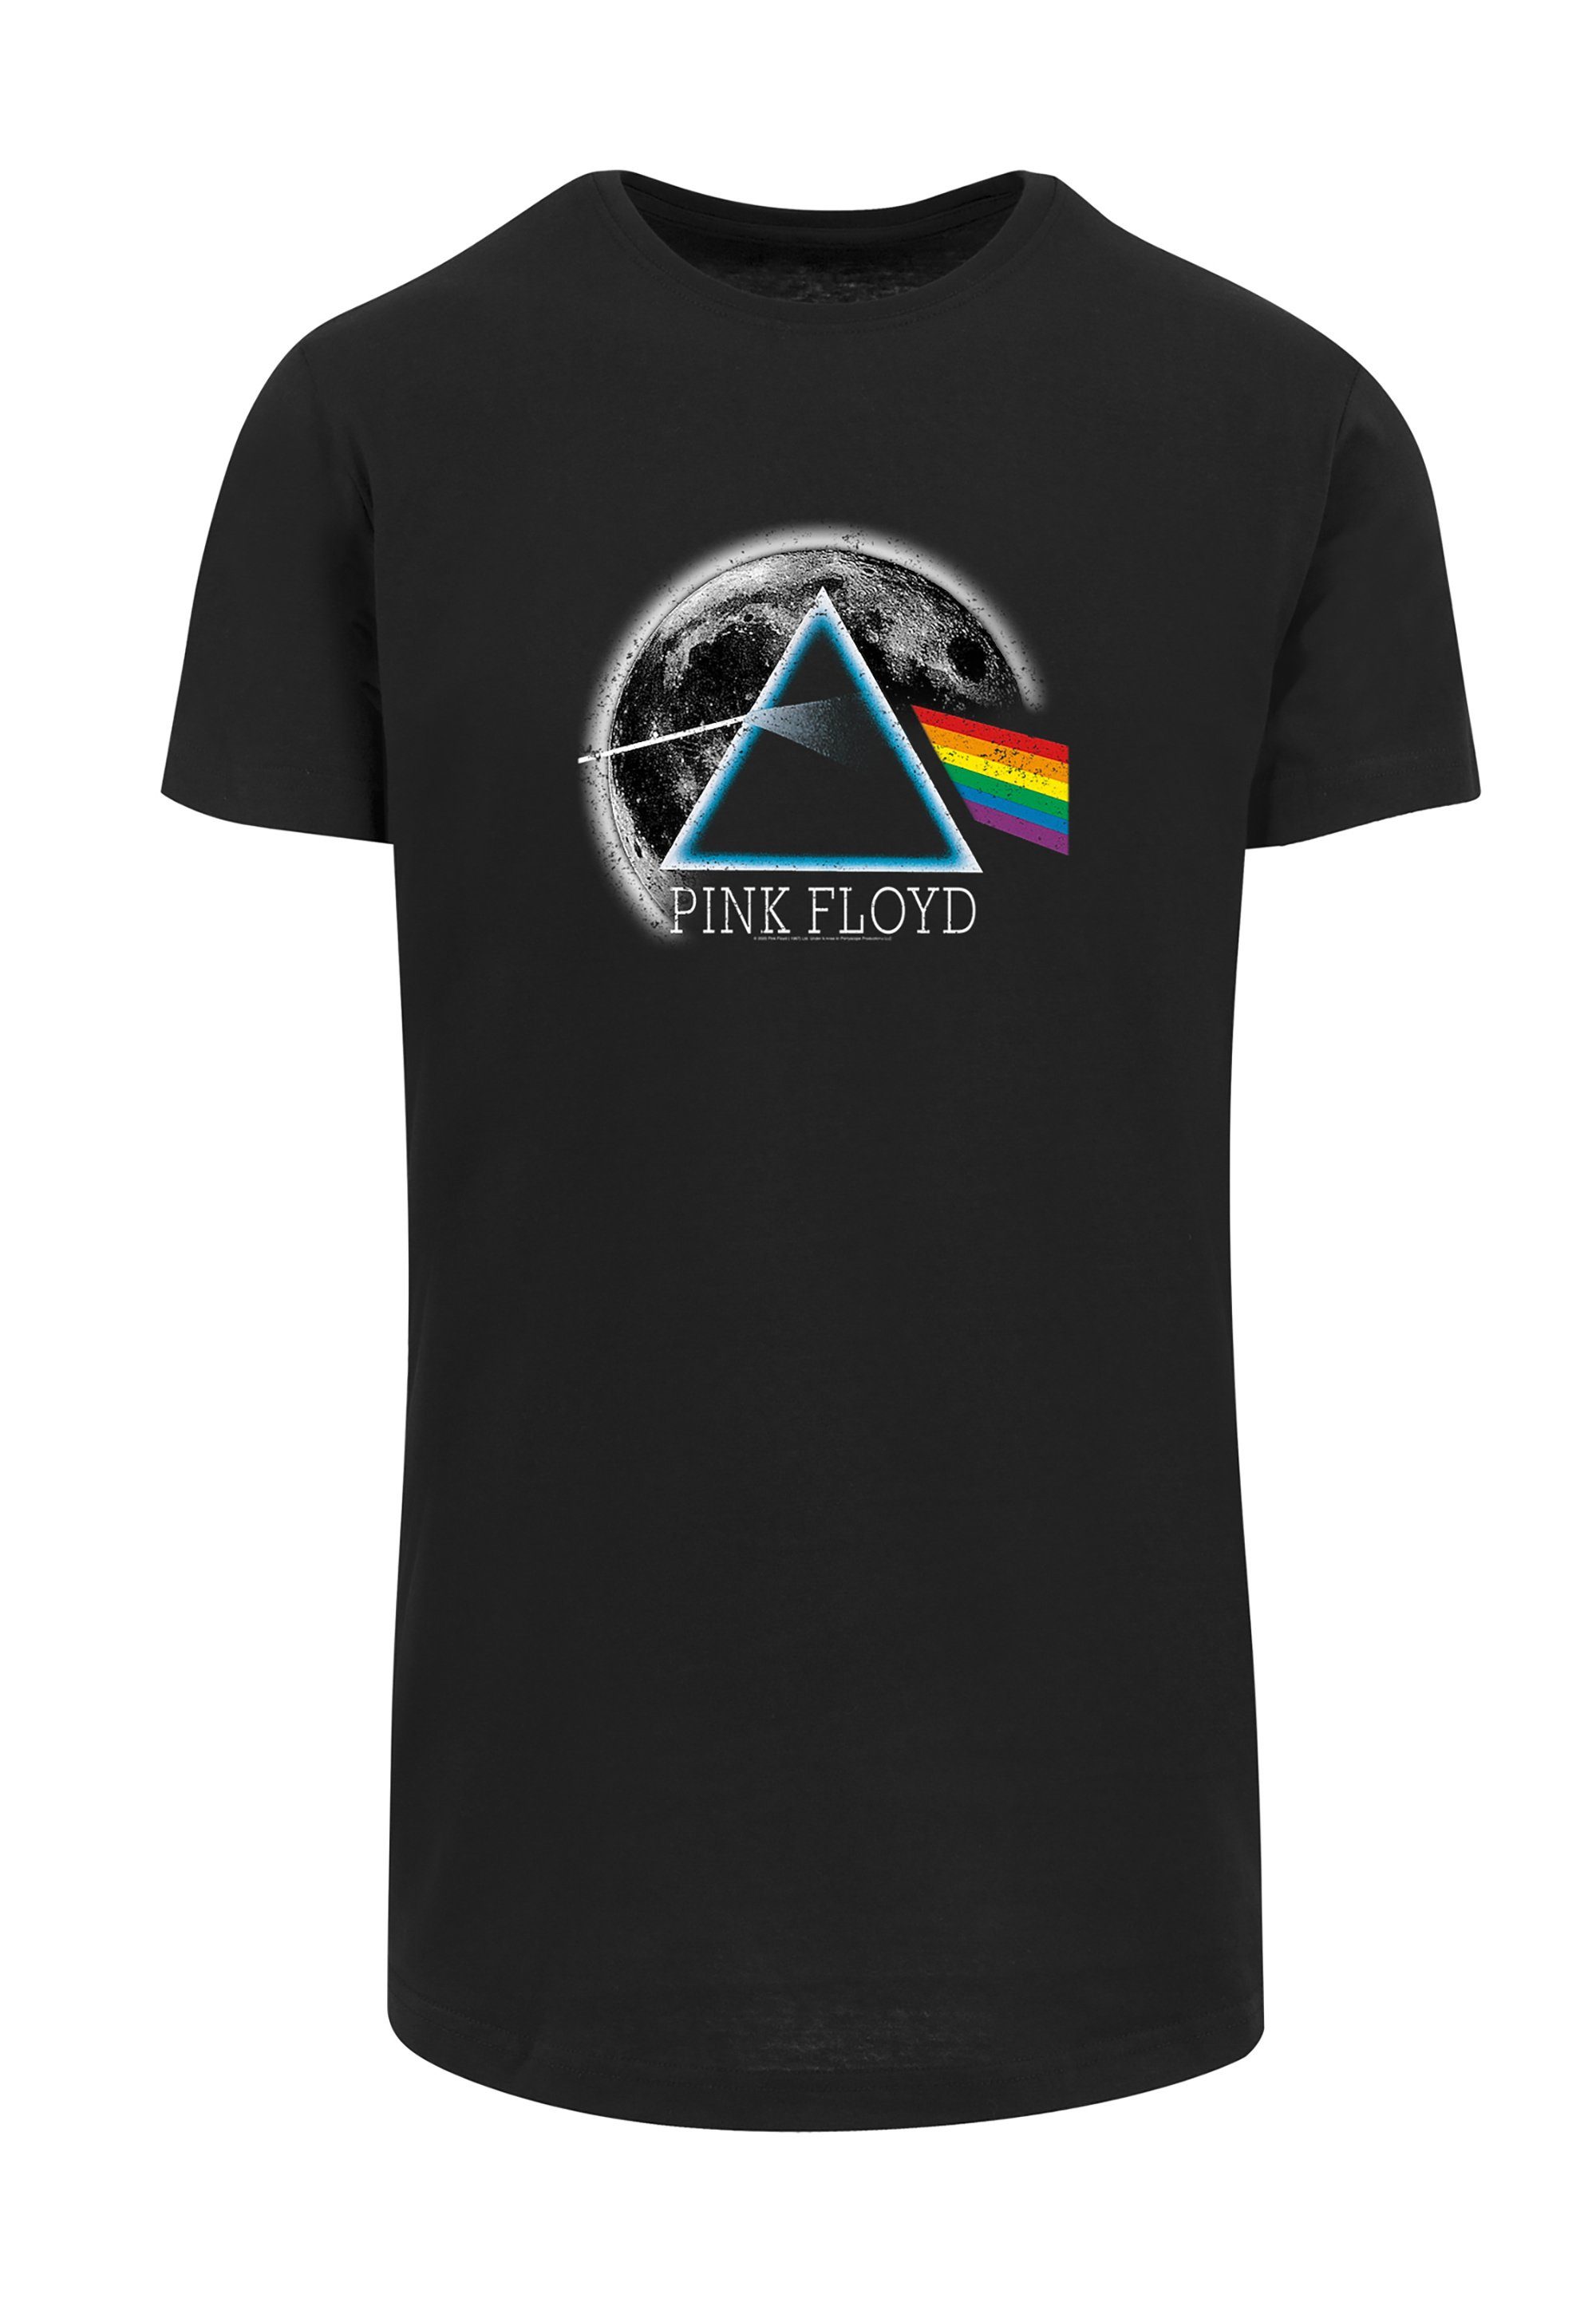 The Dark Distressed Floyd Moon T-Shirt Merch F4NT4STIC Print Side Pink of Fan